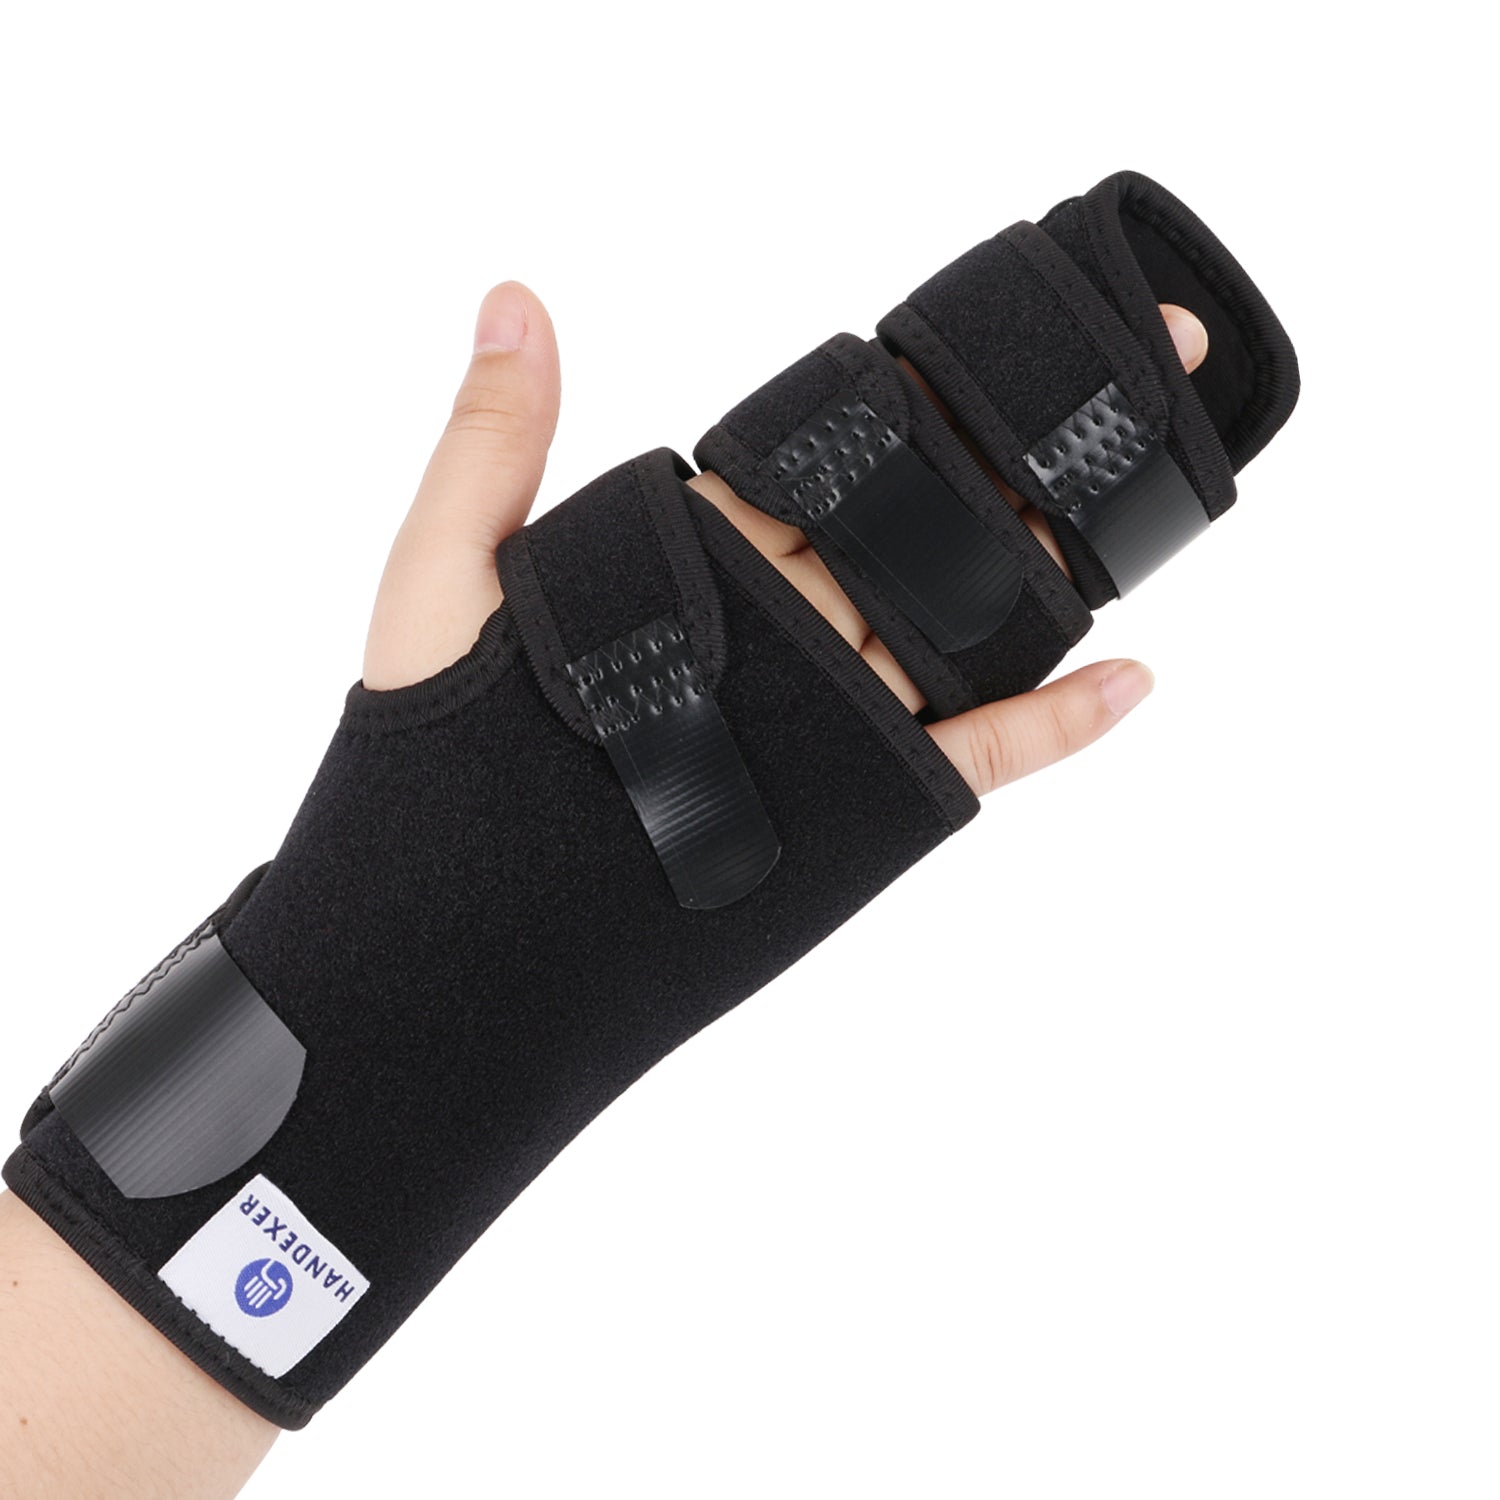  Handexer Wrist Brace with Adjustable Knob